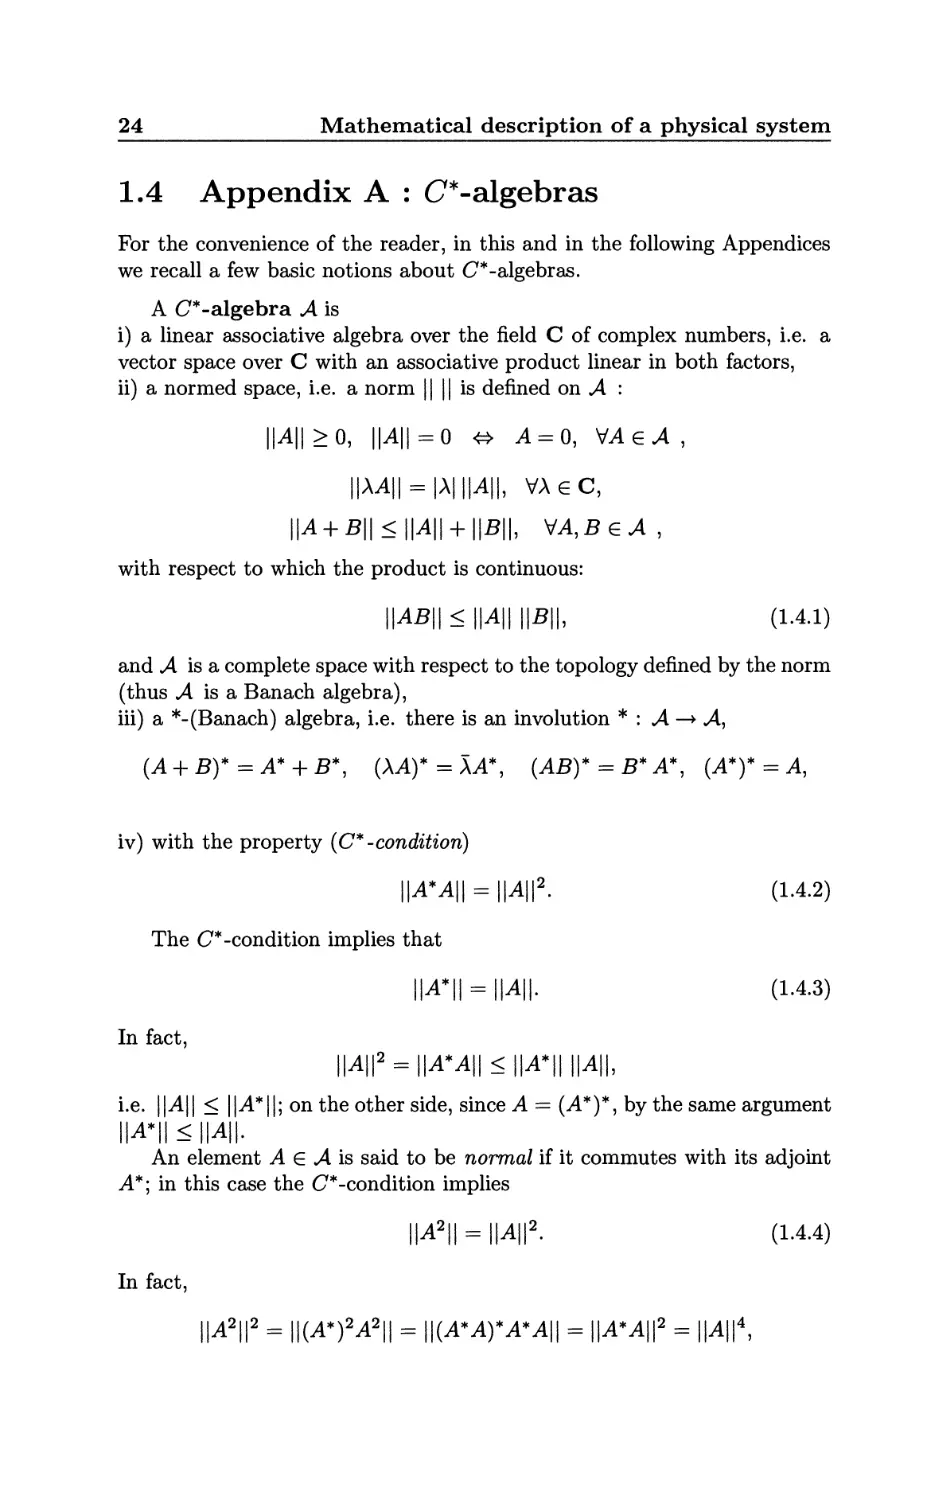 1.4 Appendix A : C^*-algebras